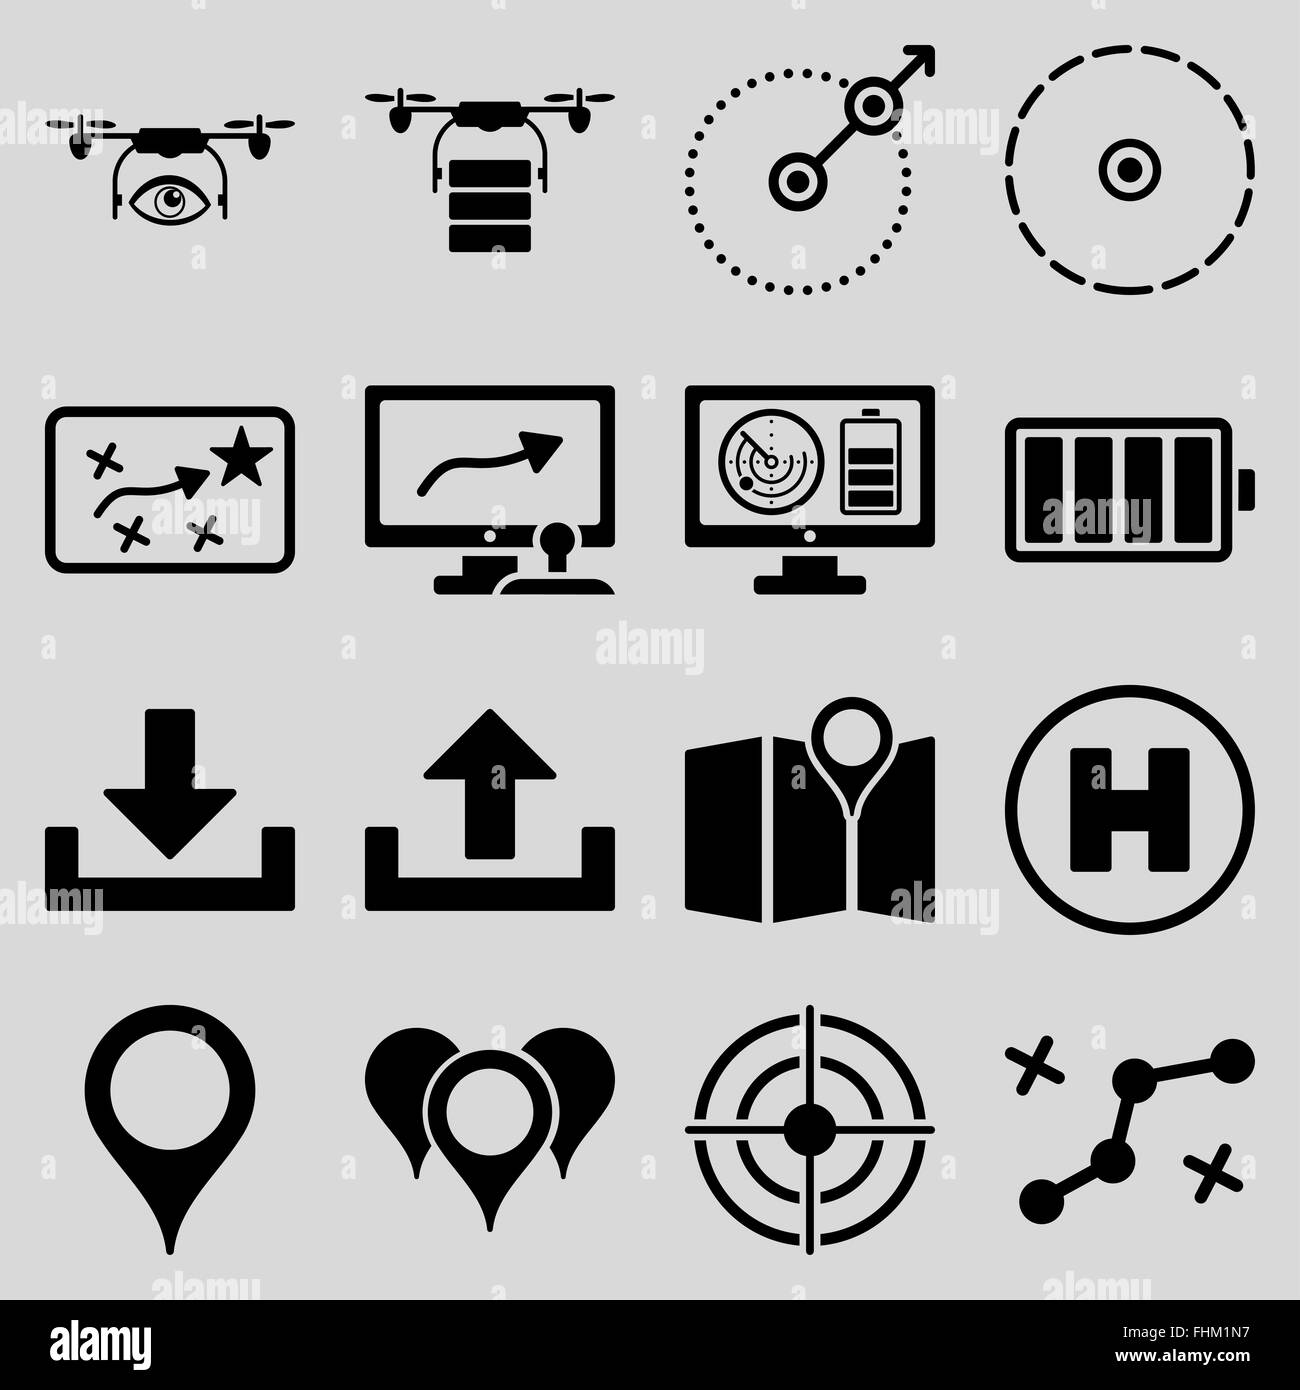 Drone control icon set Stock Photo